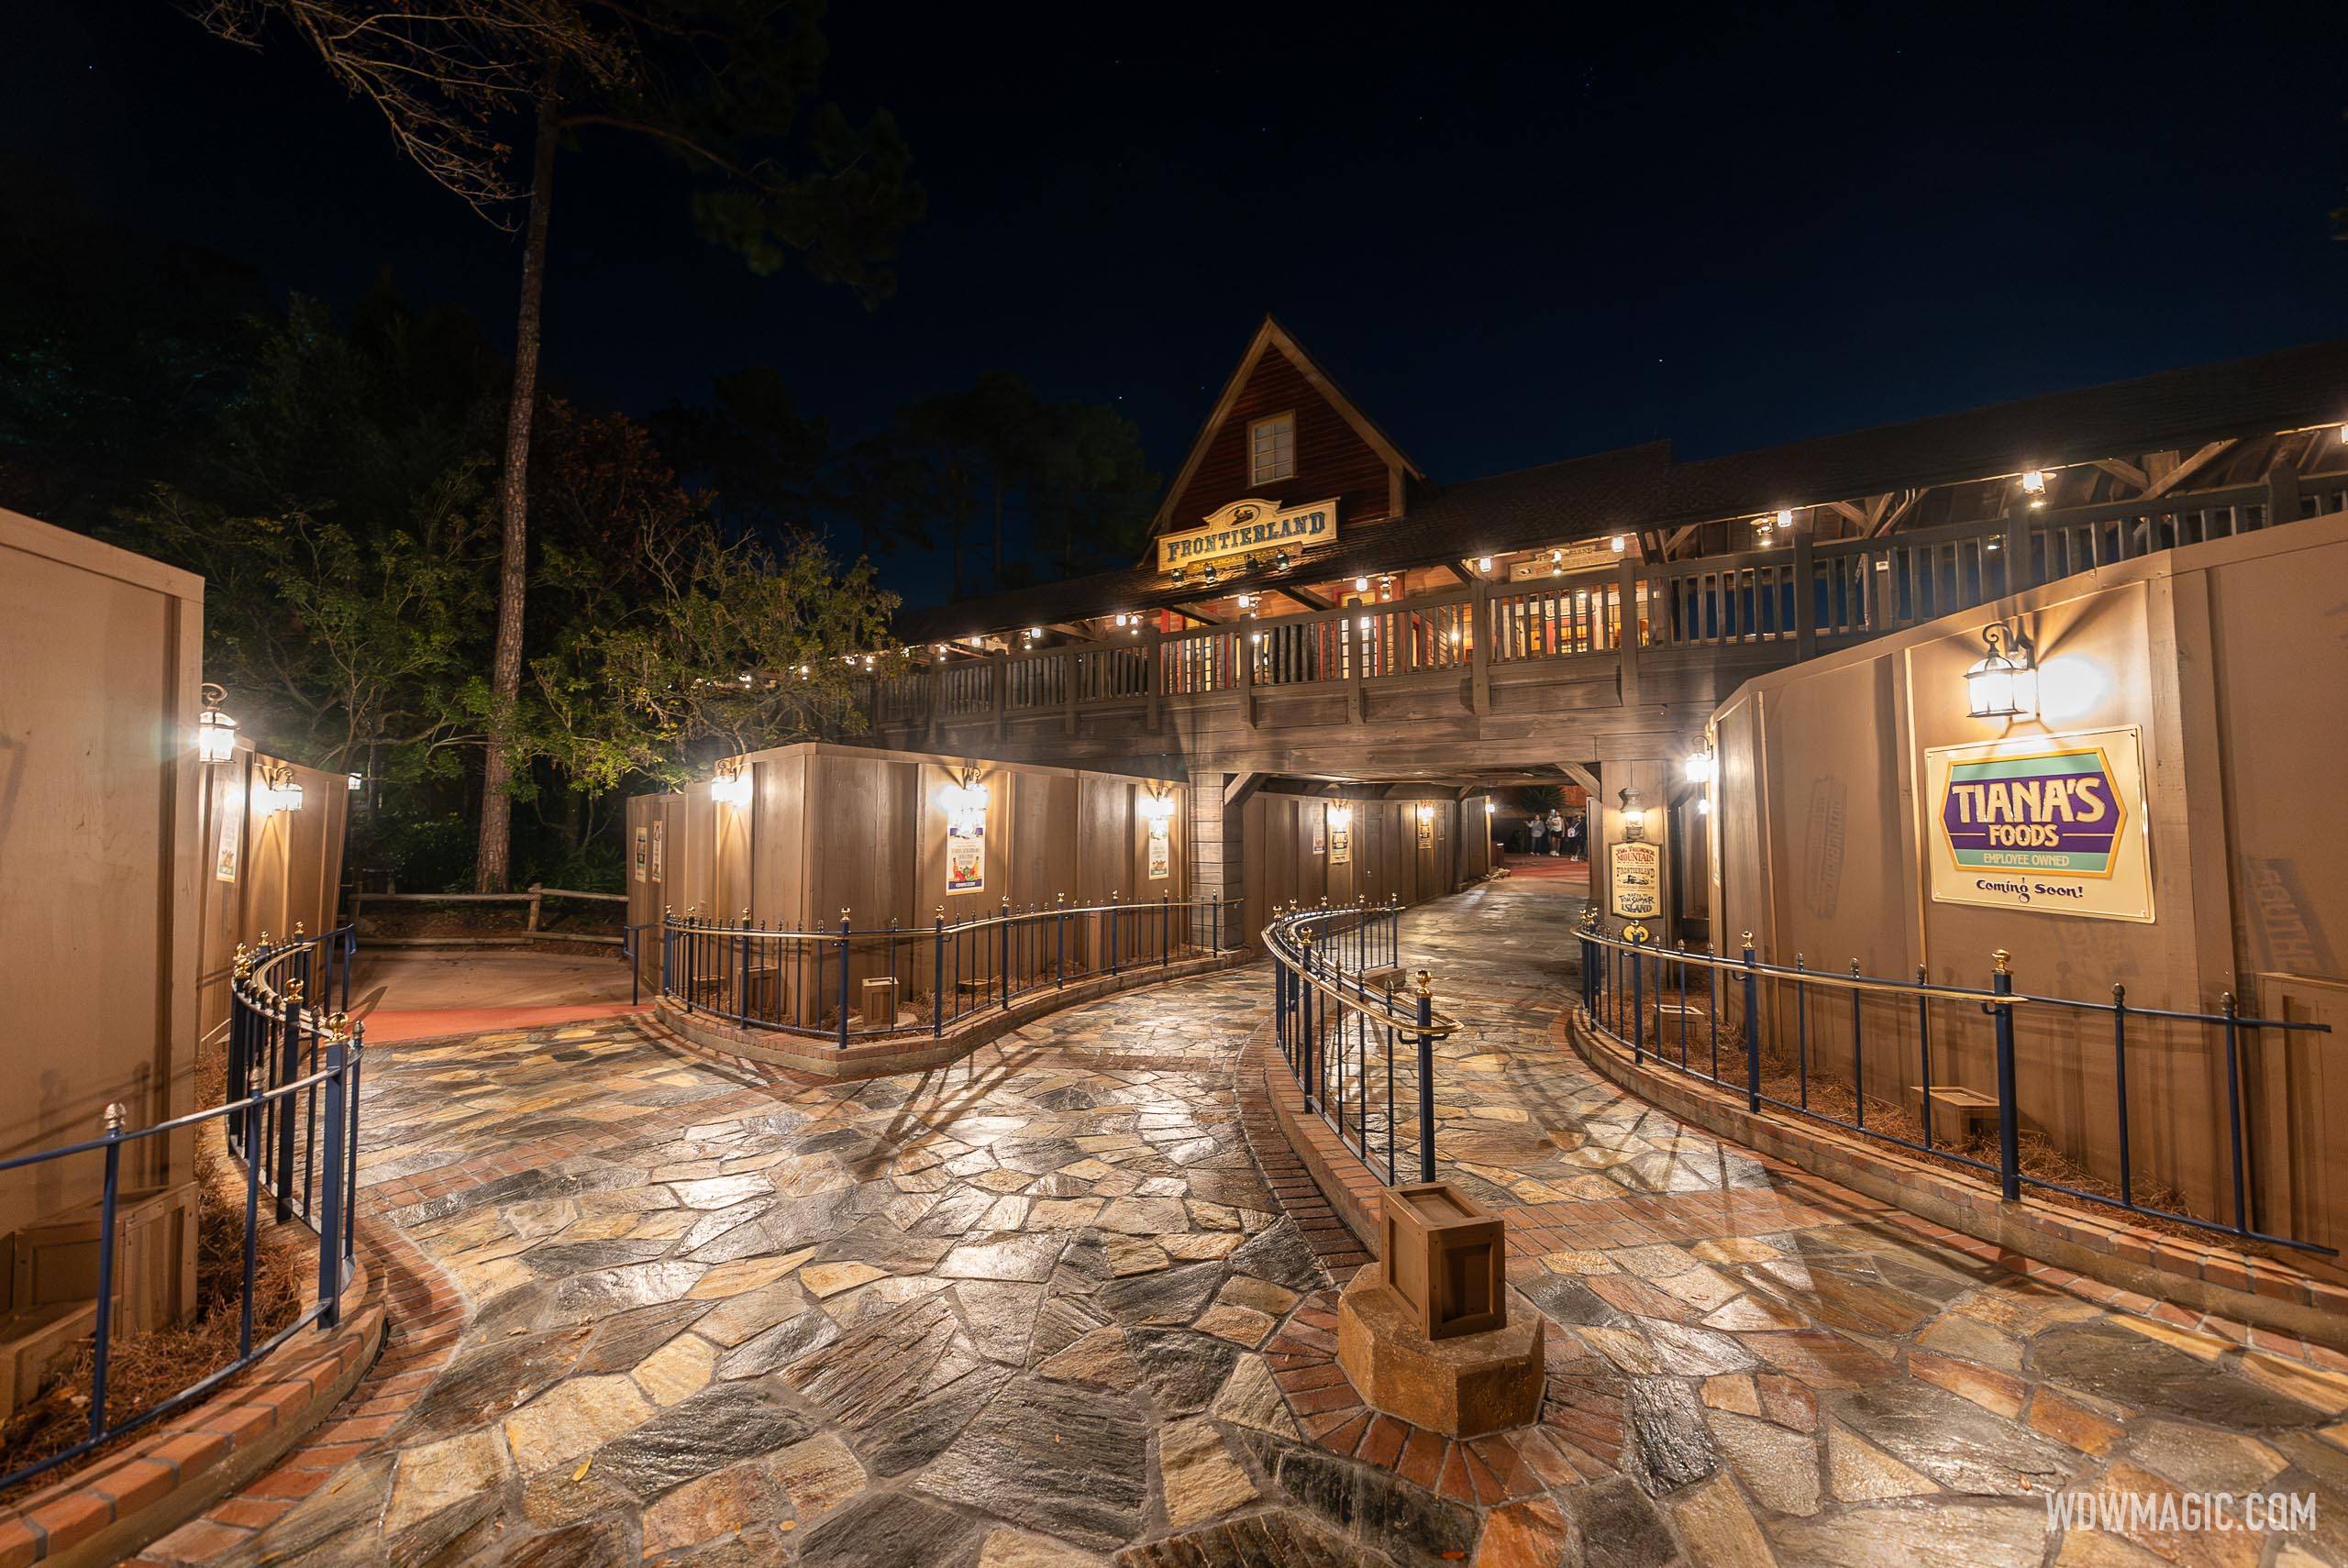 New guest walkway opens at Tiana's Bayou Adventure in Magic Kingdom